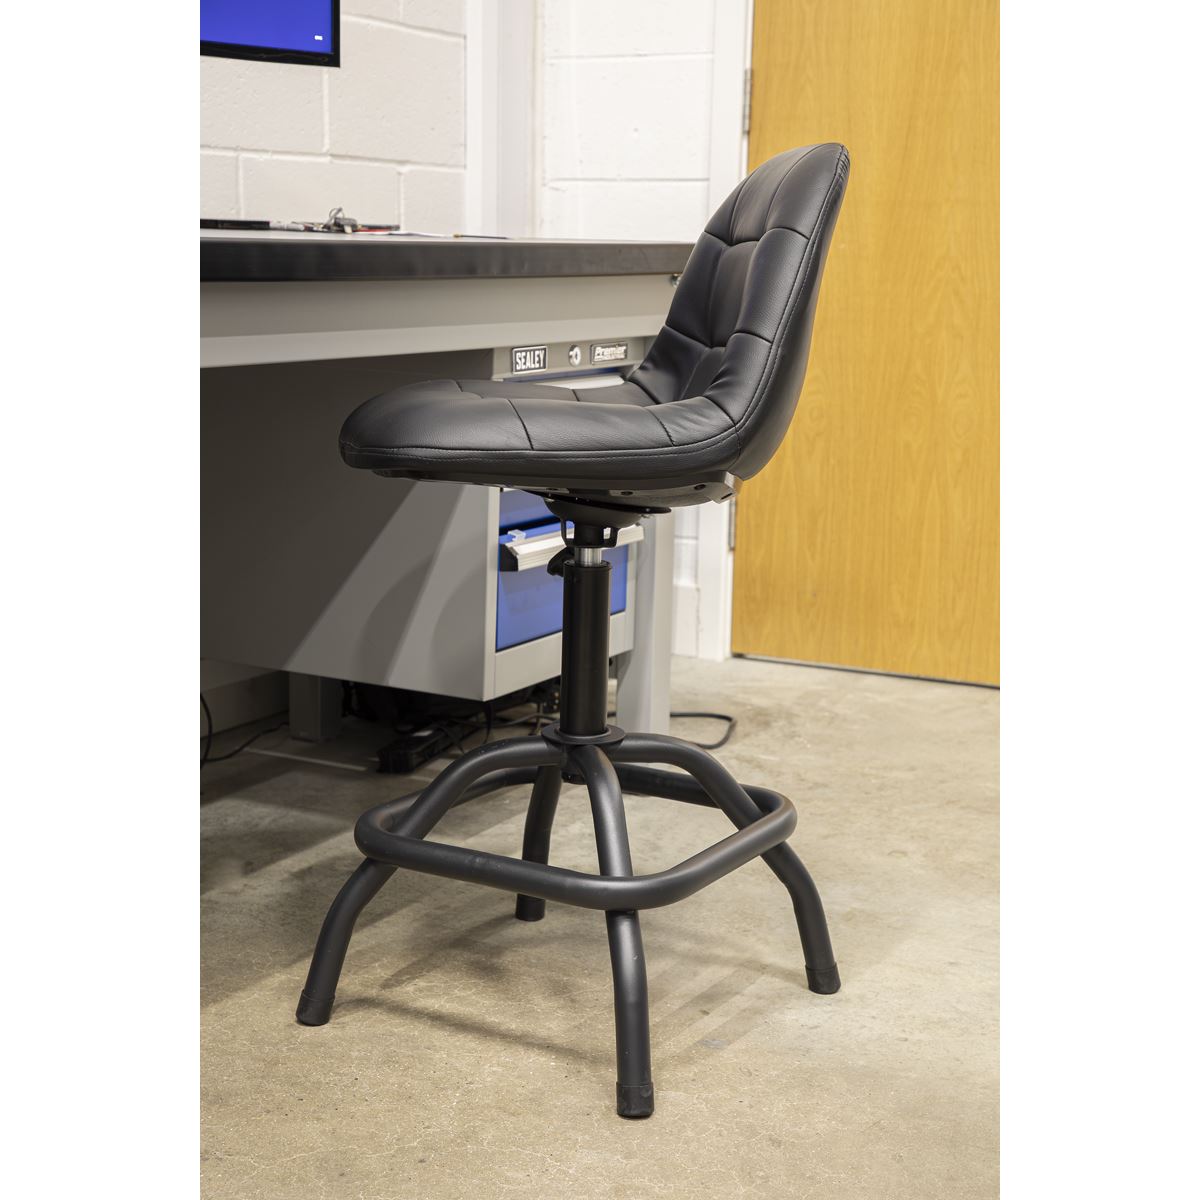 Sealey Premier Industrial Premier Industrial Pneumatic Workshop Stool with Adjustable Height Swivel Seat & Back Rest